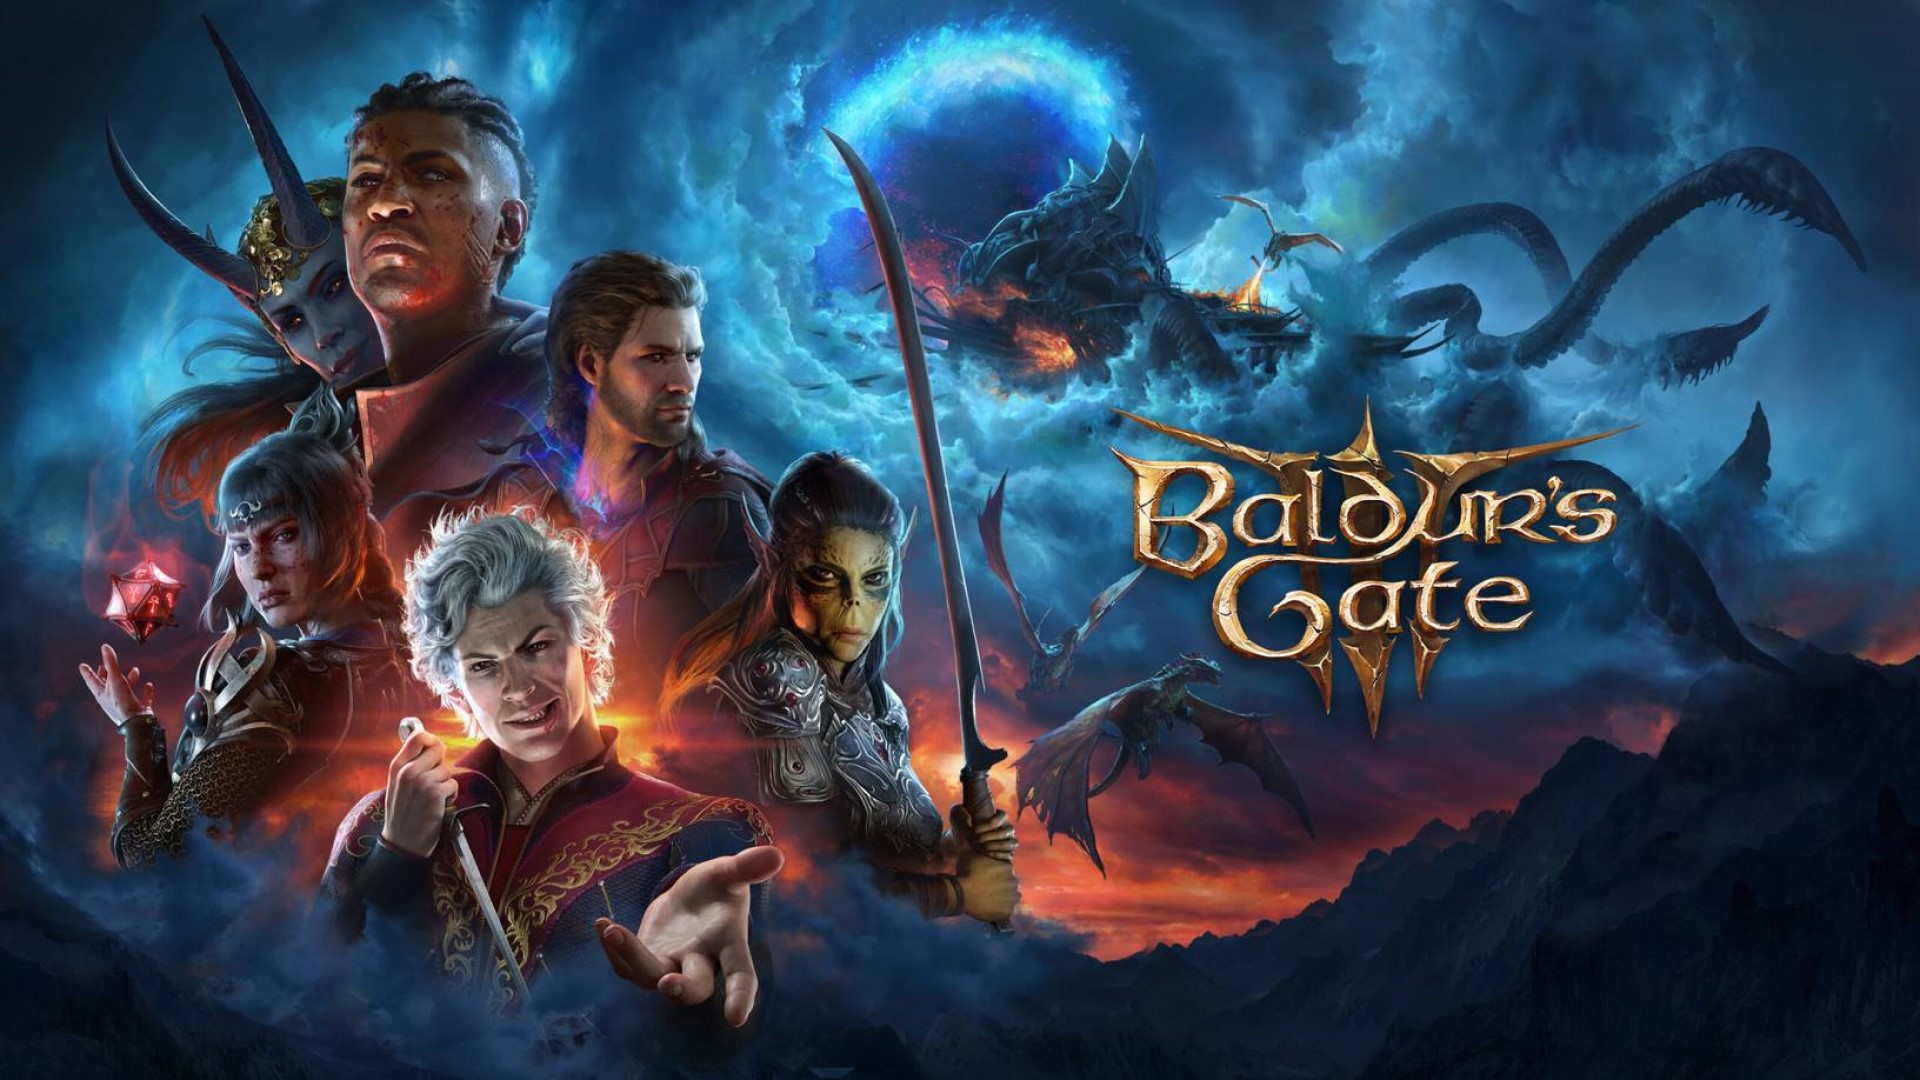 Baldur’s Gate 3 Trailer Introduces Lord Enver Gortash, the Second Antagonist